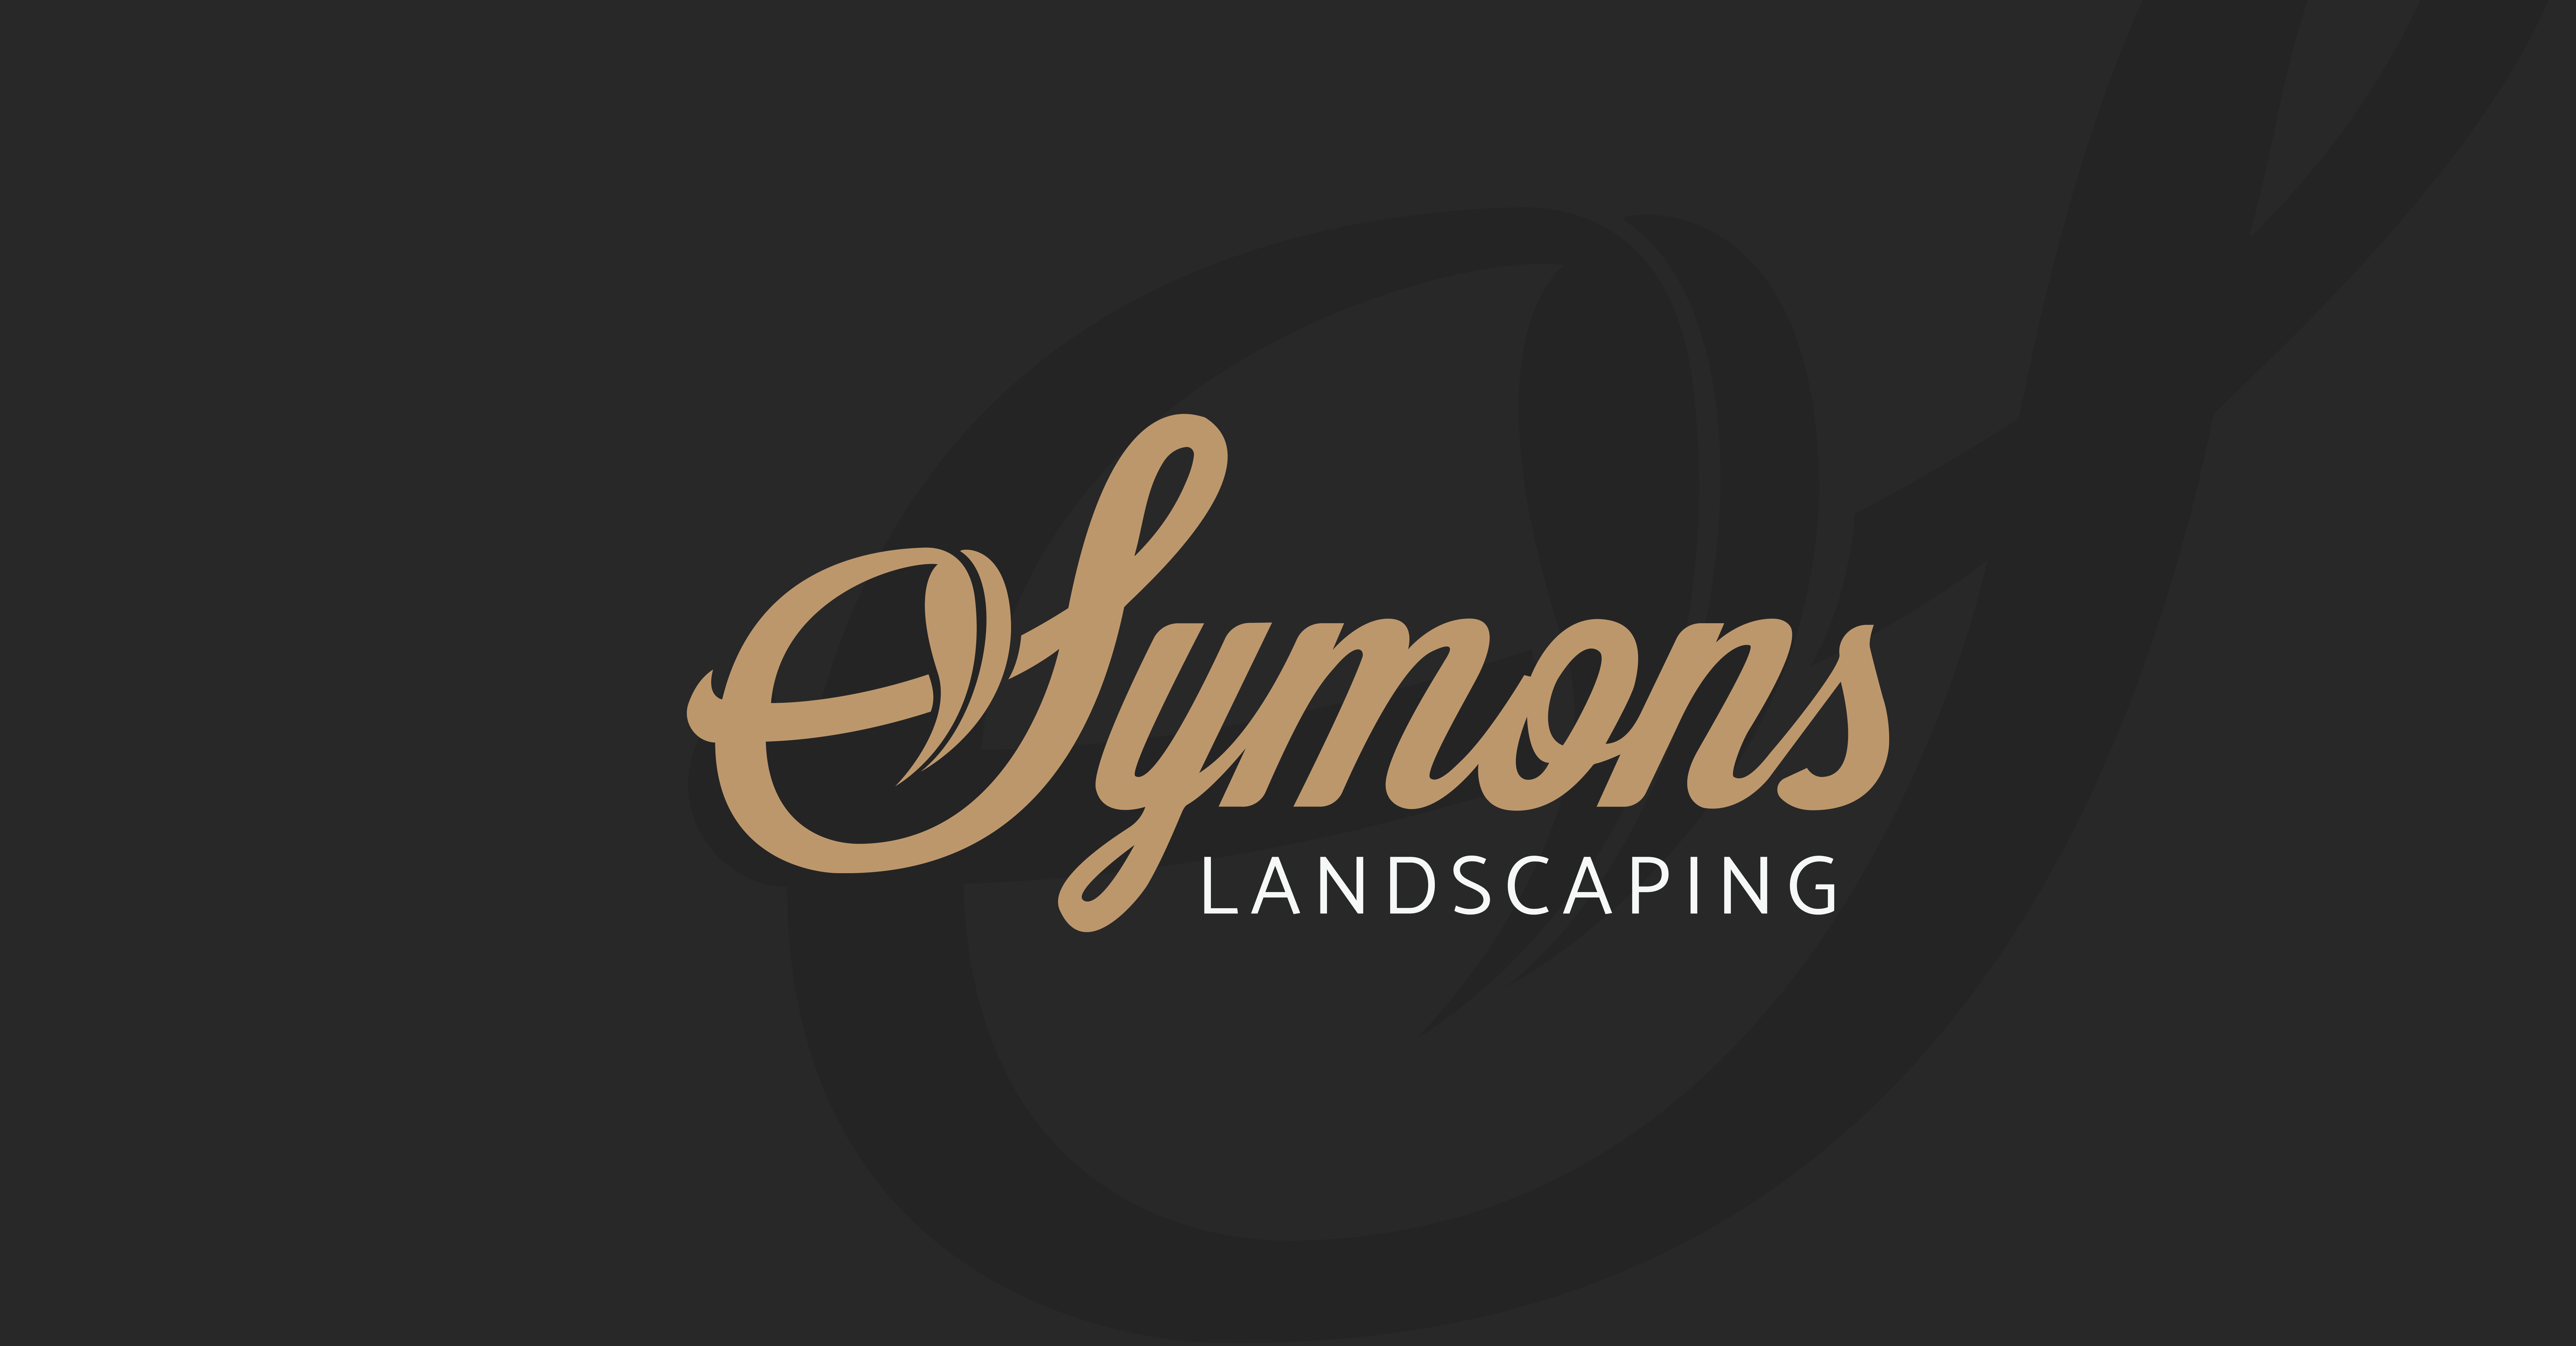 Symons Landscaping thumbnail